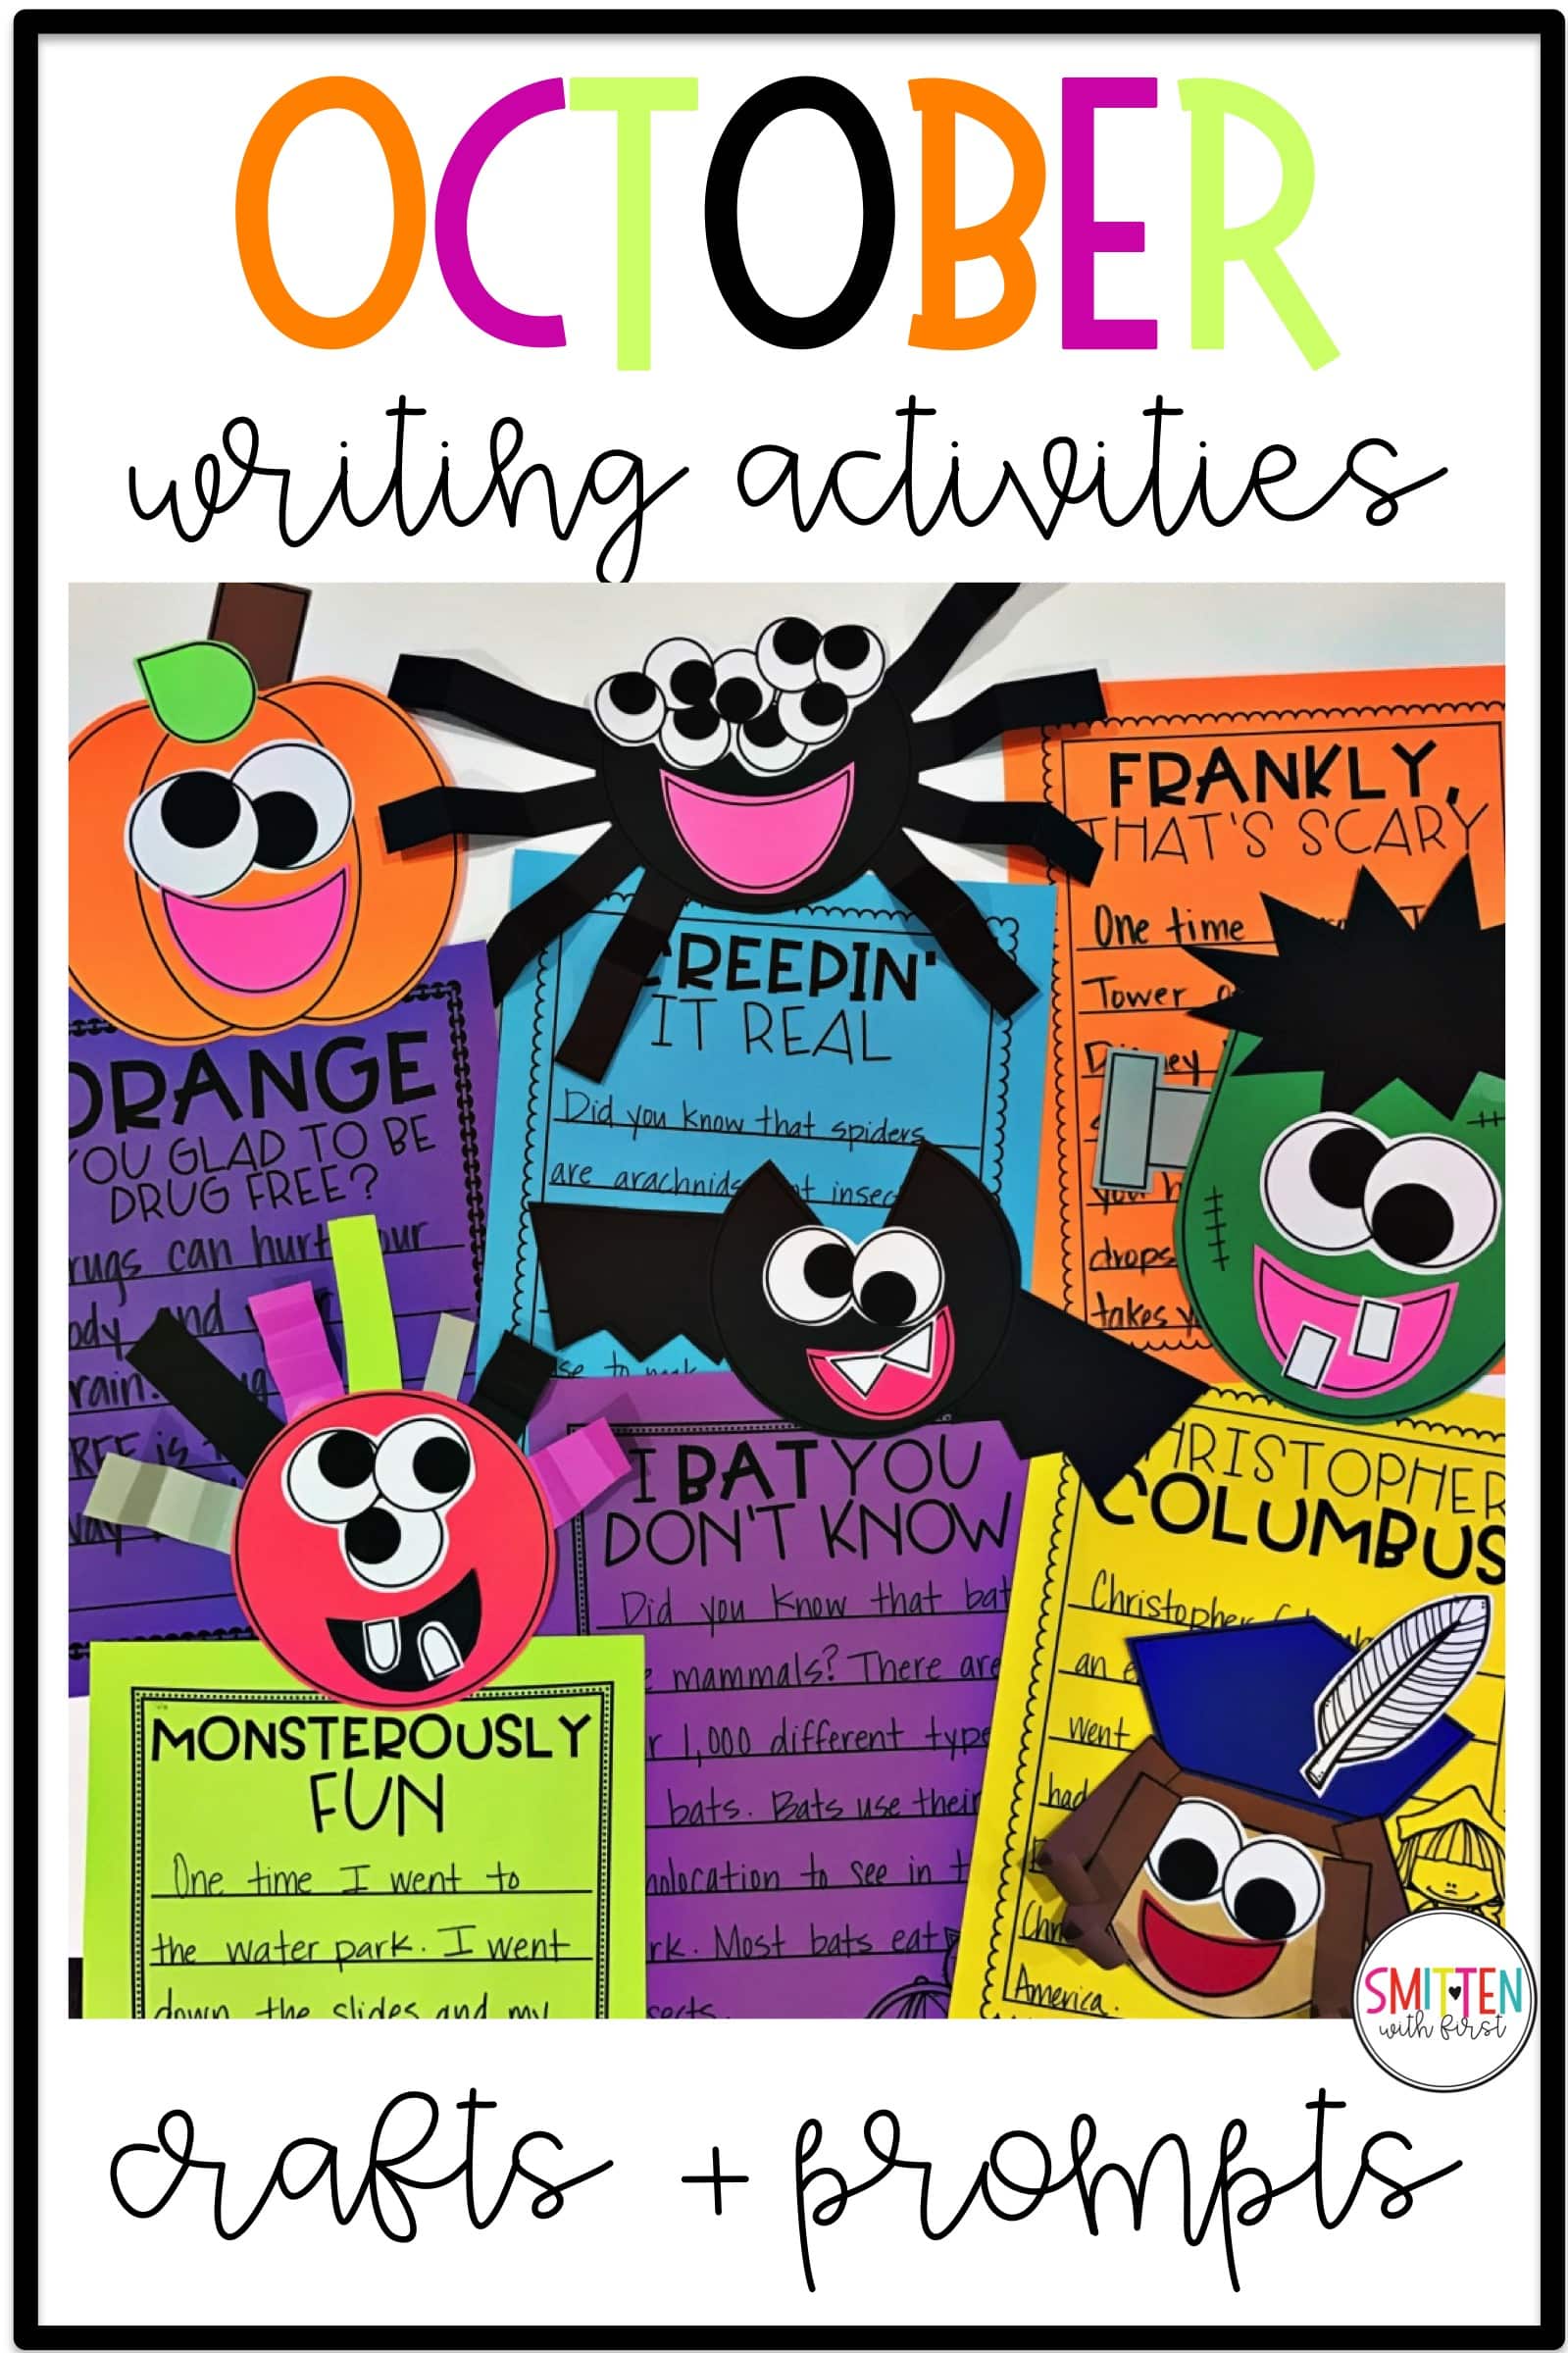 October writing activities